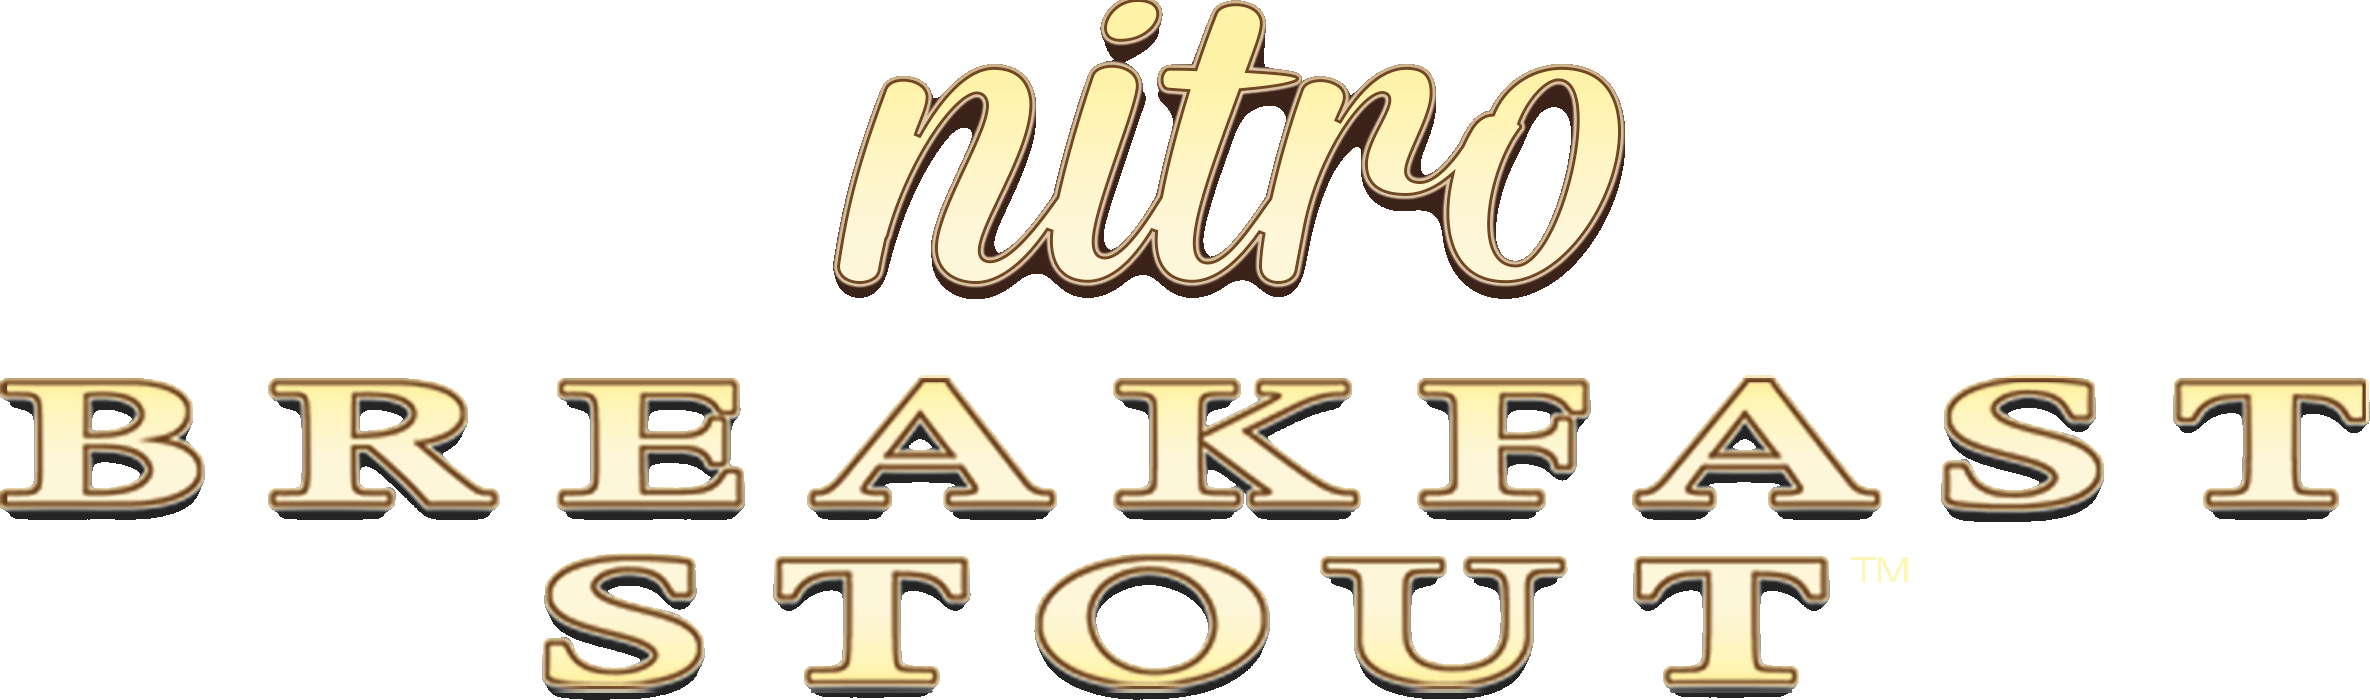 Nitro Breakfast Stout logo